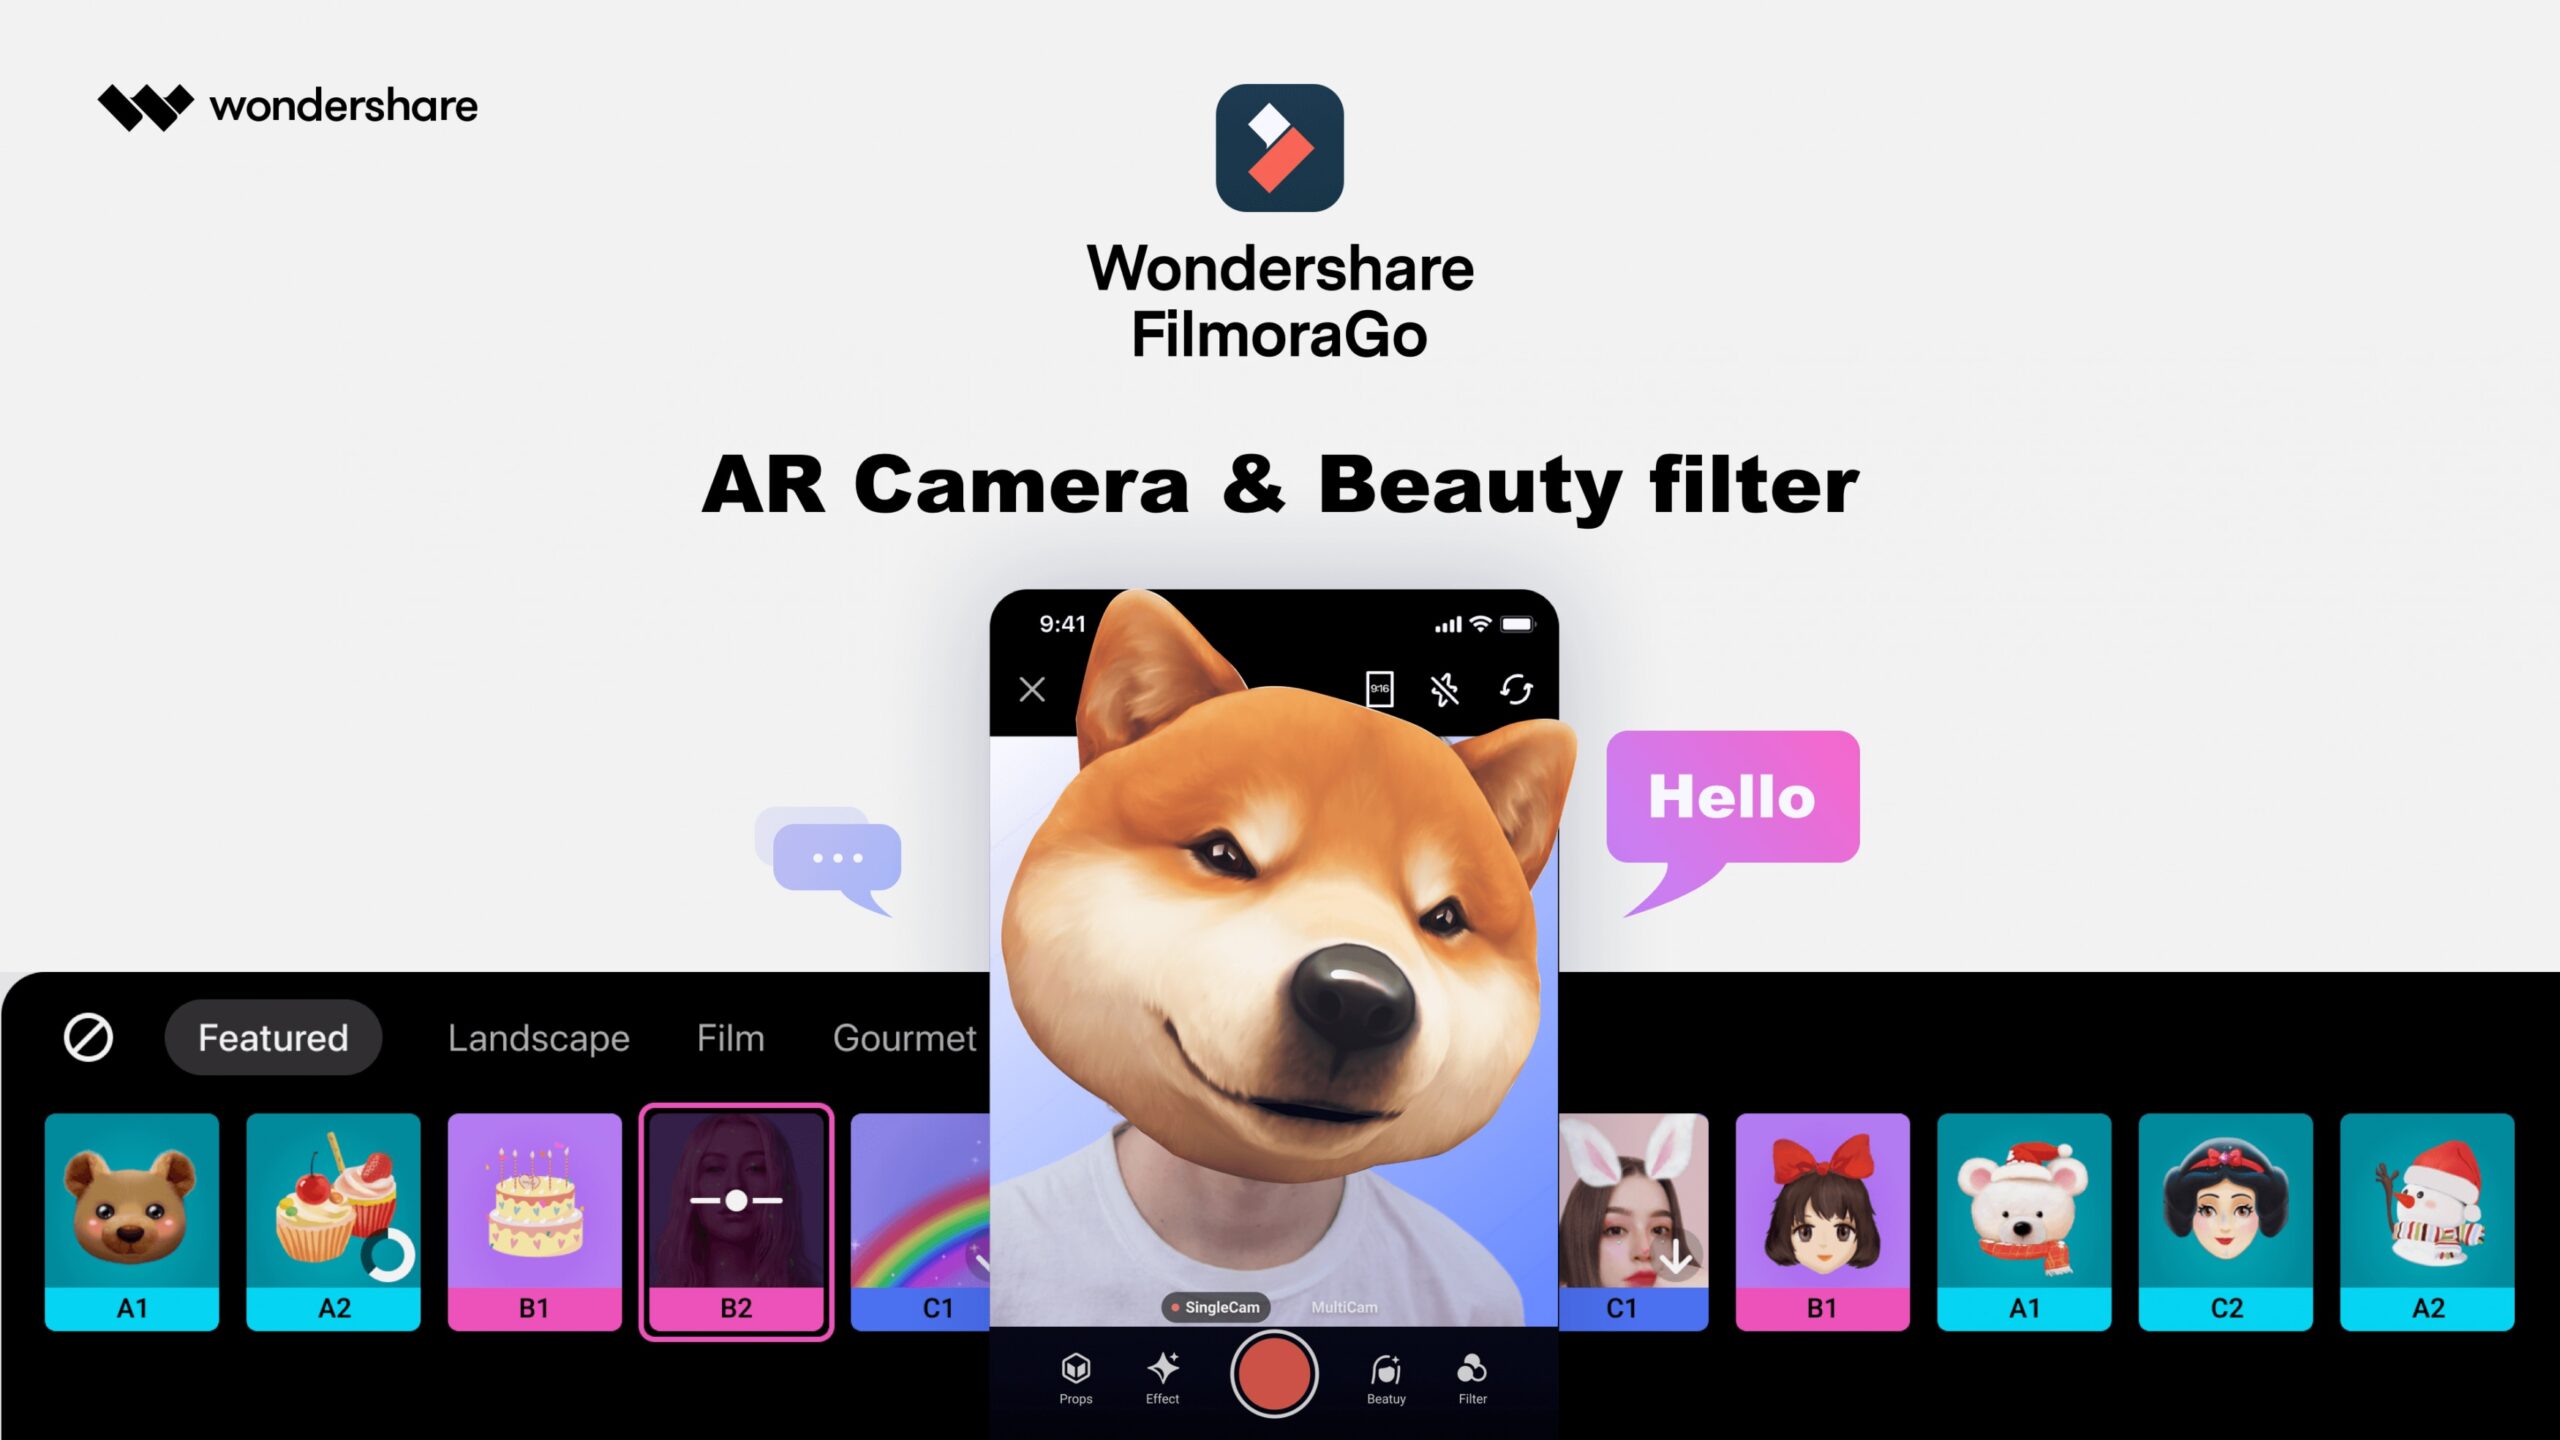 Wondershare FilmoraGo V5.8 Update Brings AR Camera Feature for iOS Users